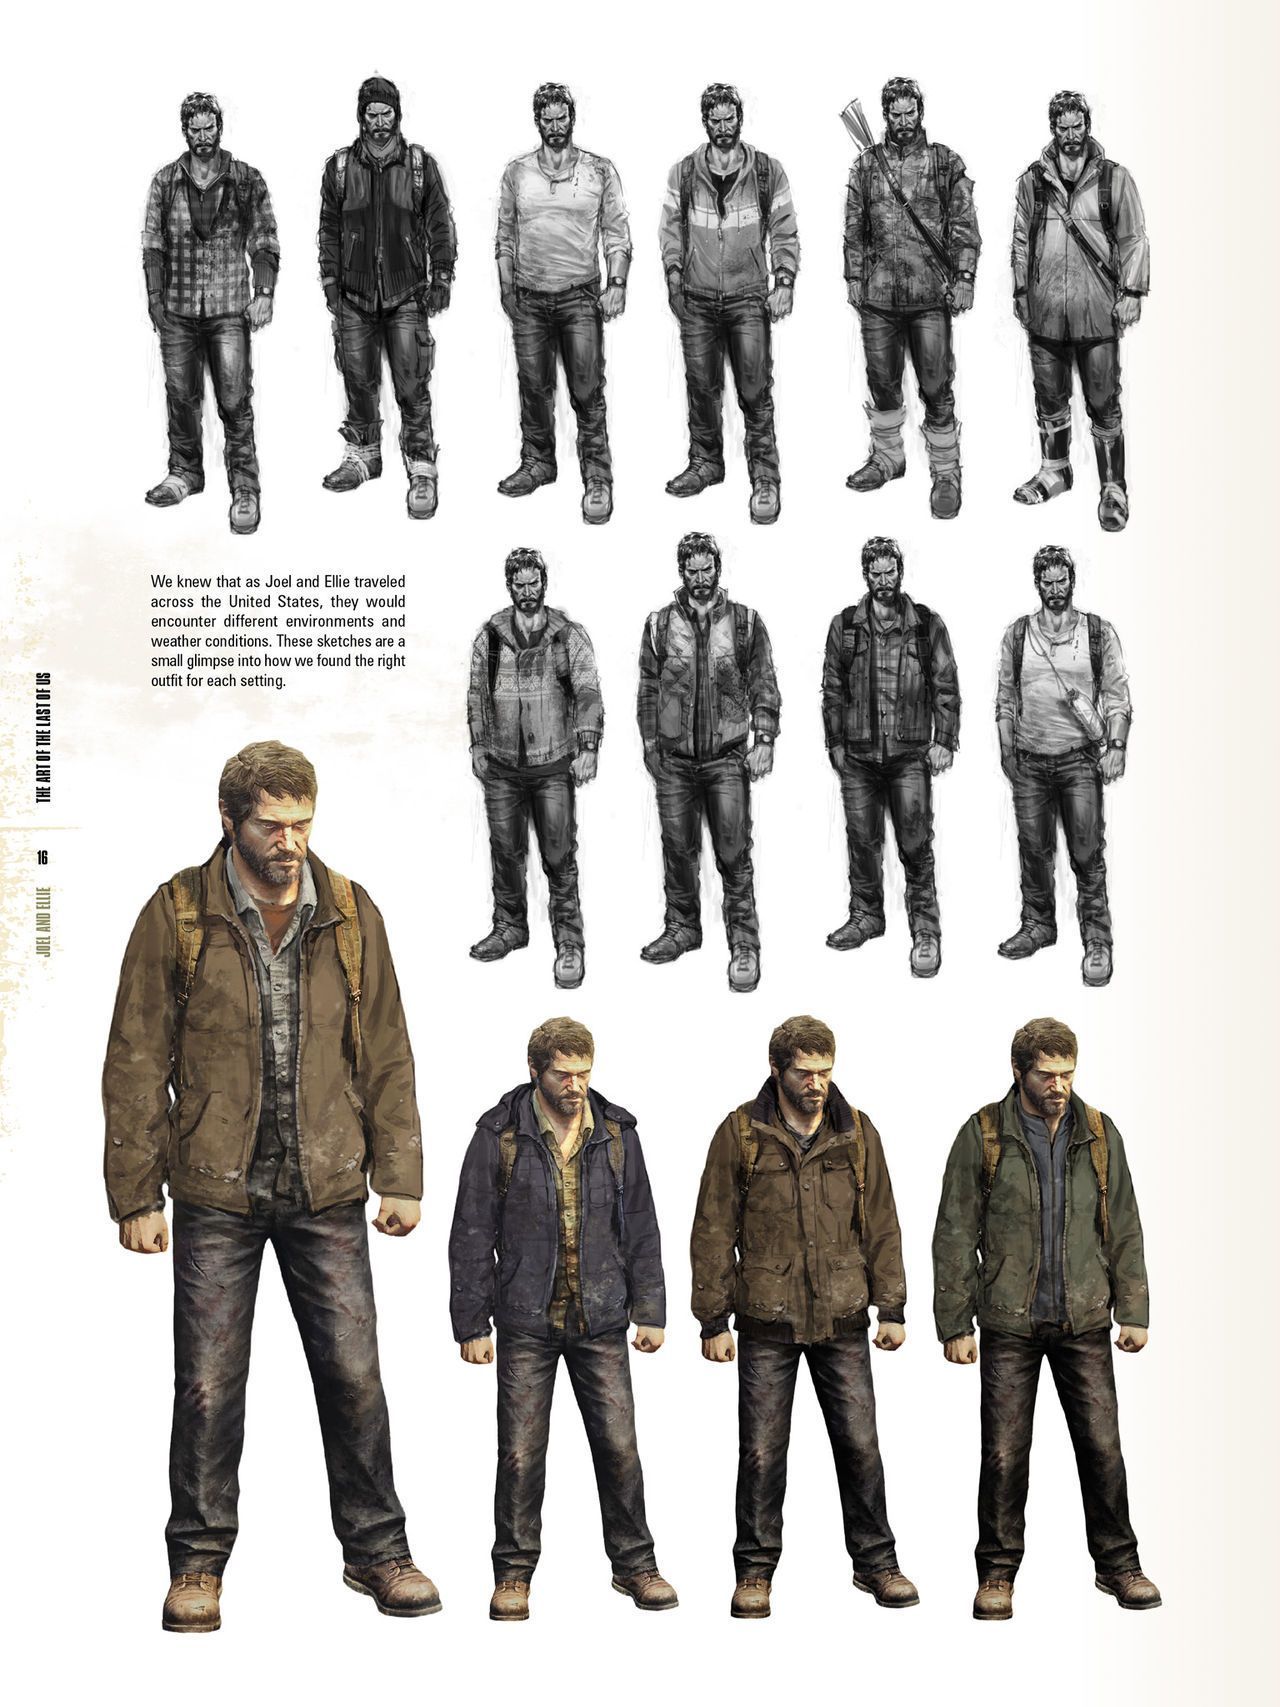 The Art of The Last of Us (2013) (Digital)